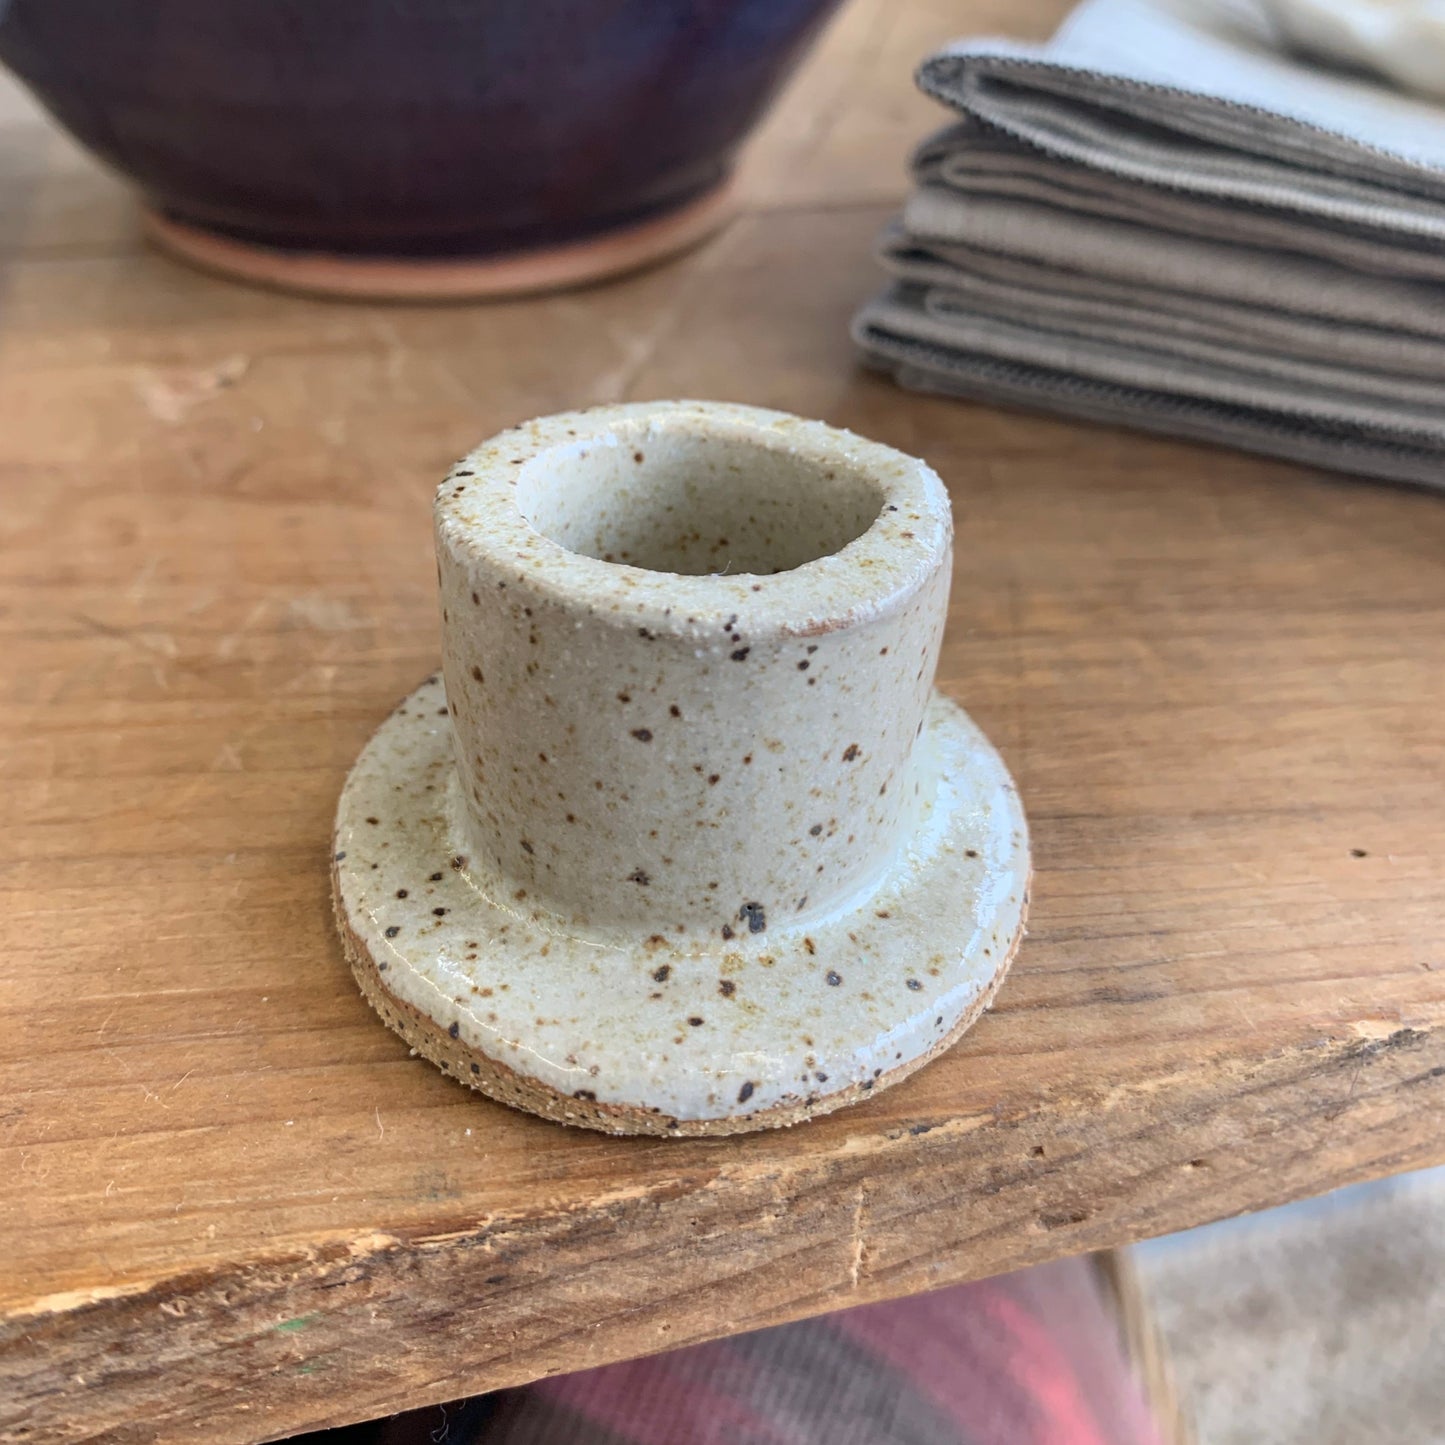 Ceramic Candleholder